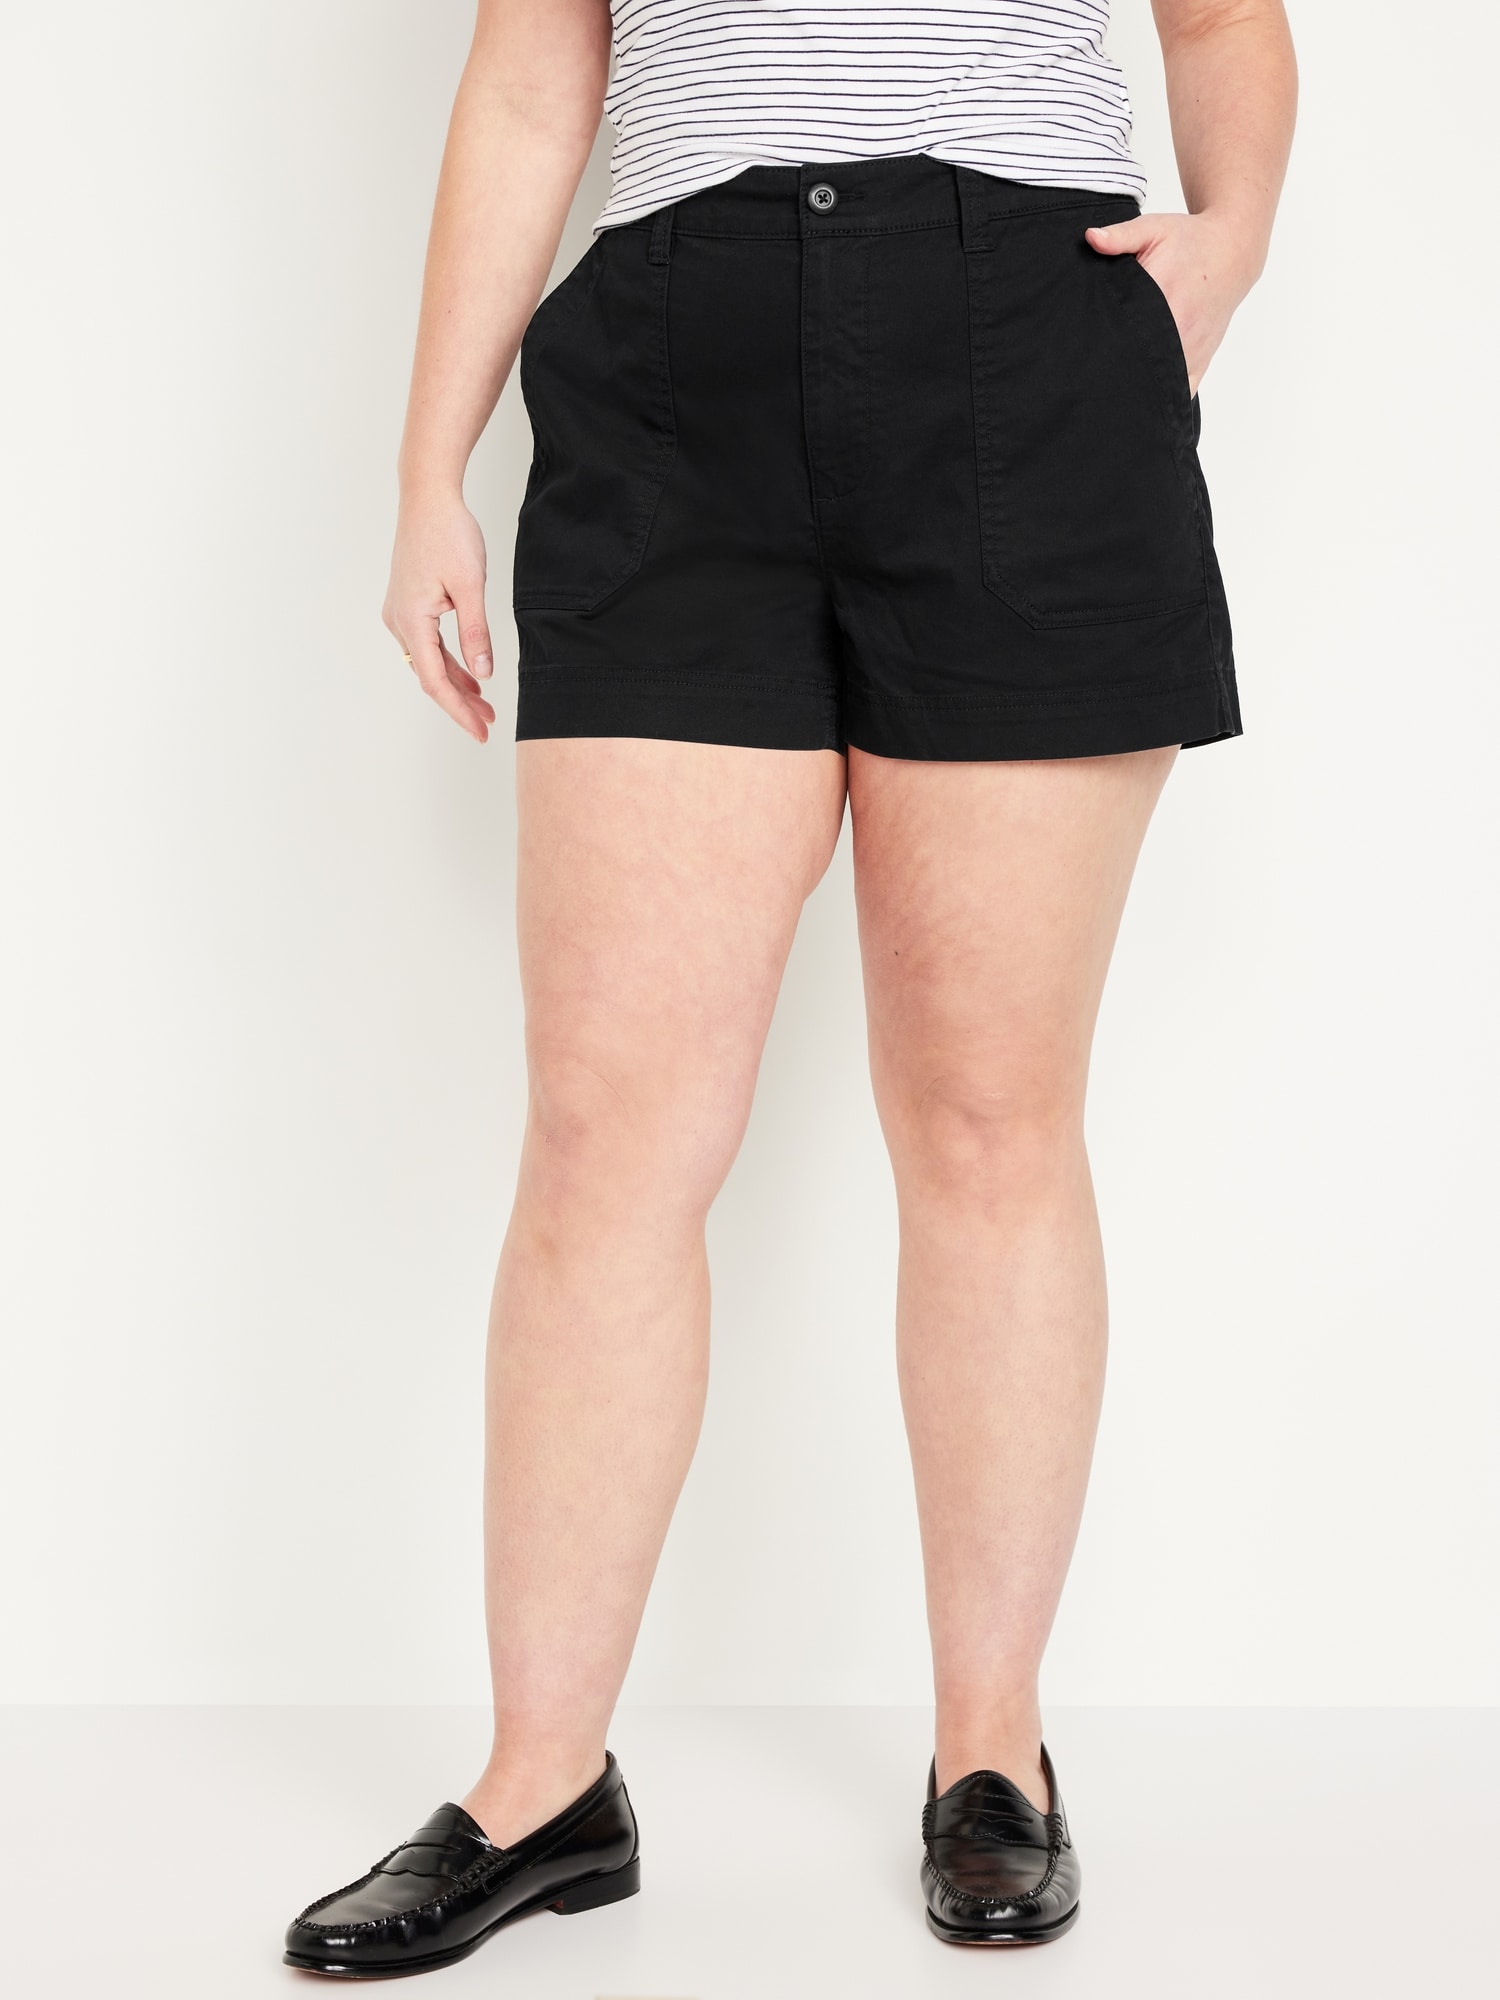 High-Waisted OGC Chino Shorts - 3.5-inch inseam